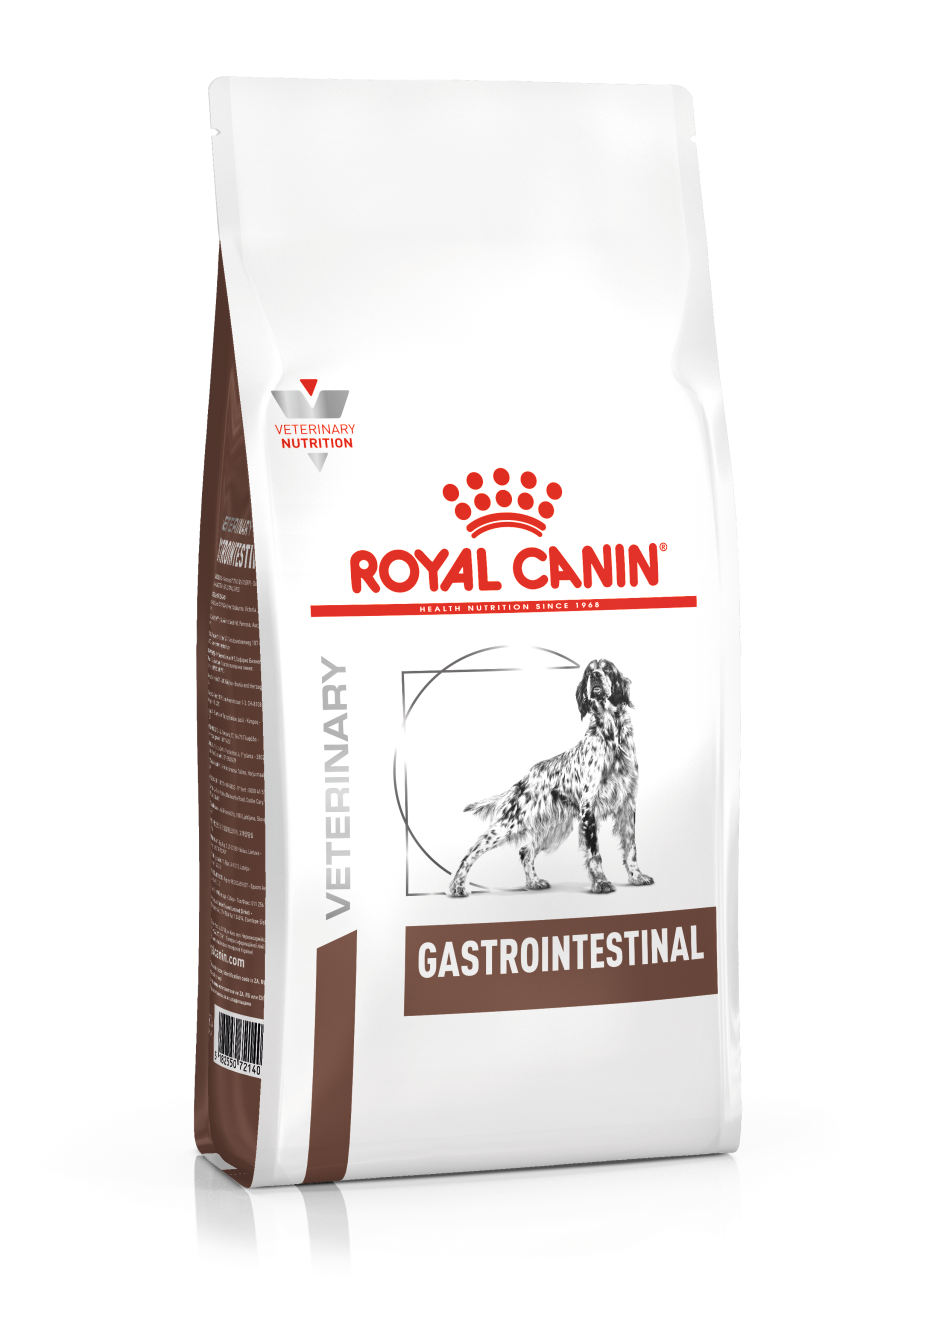 Royal Canin Gastro Intestinal hond 2x 7.5 kg